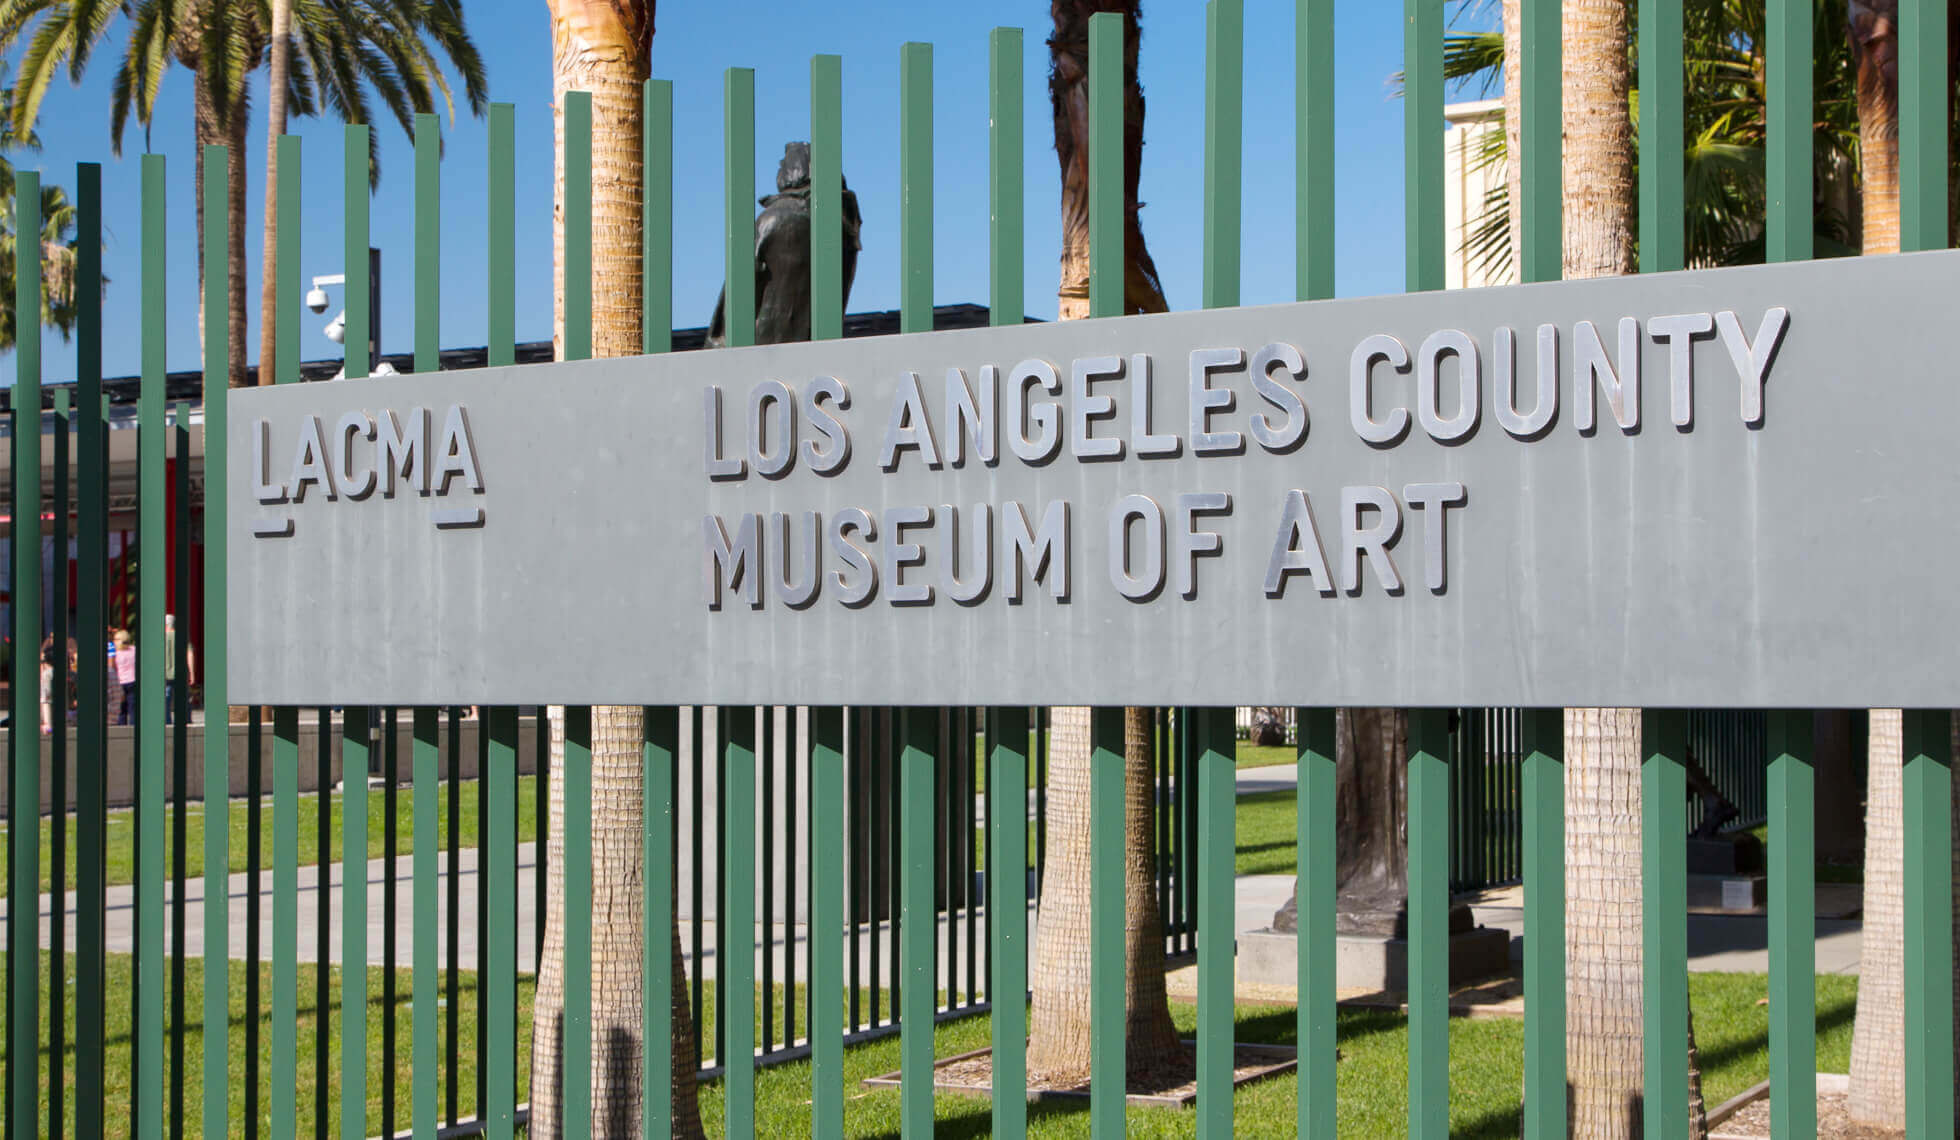 WISATA SENI  “THE LOS ANGELES COUNTY MUSEUM OF ART” DI LOS ANGELES